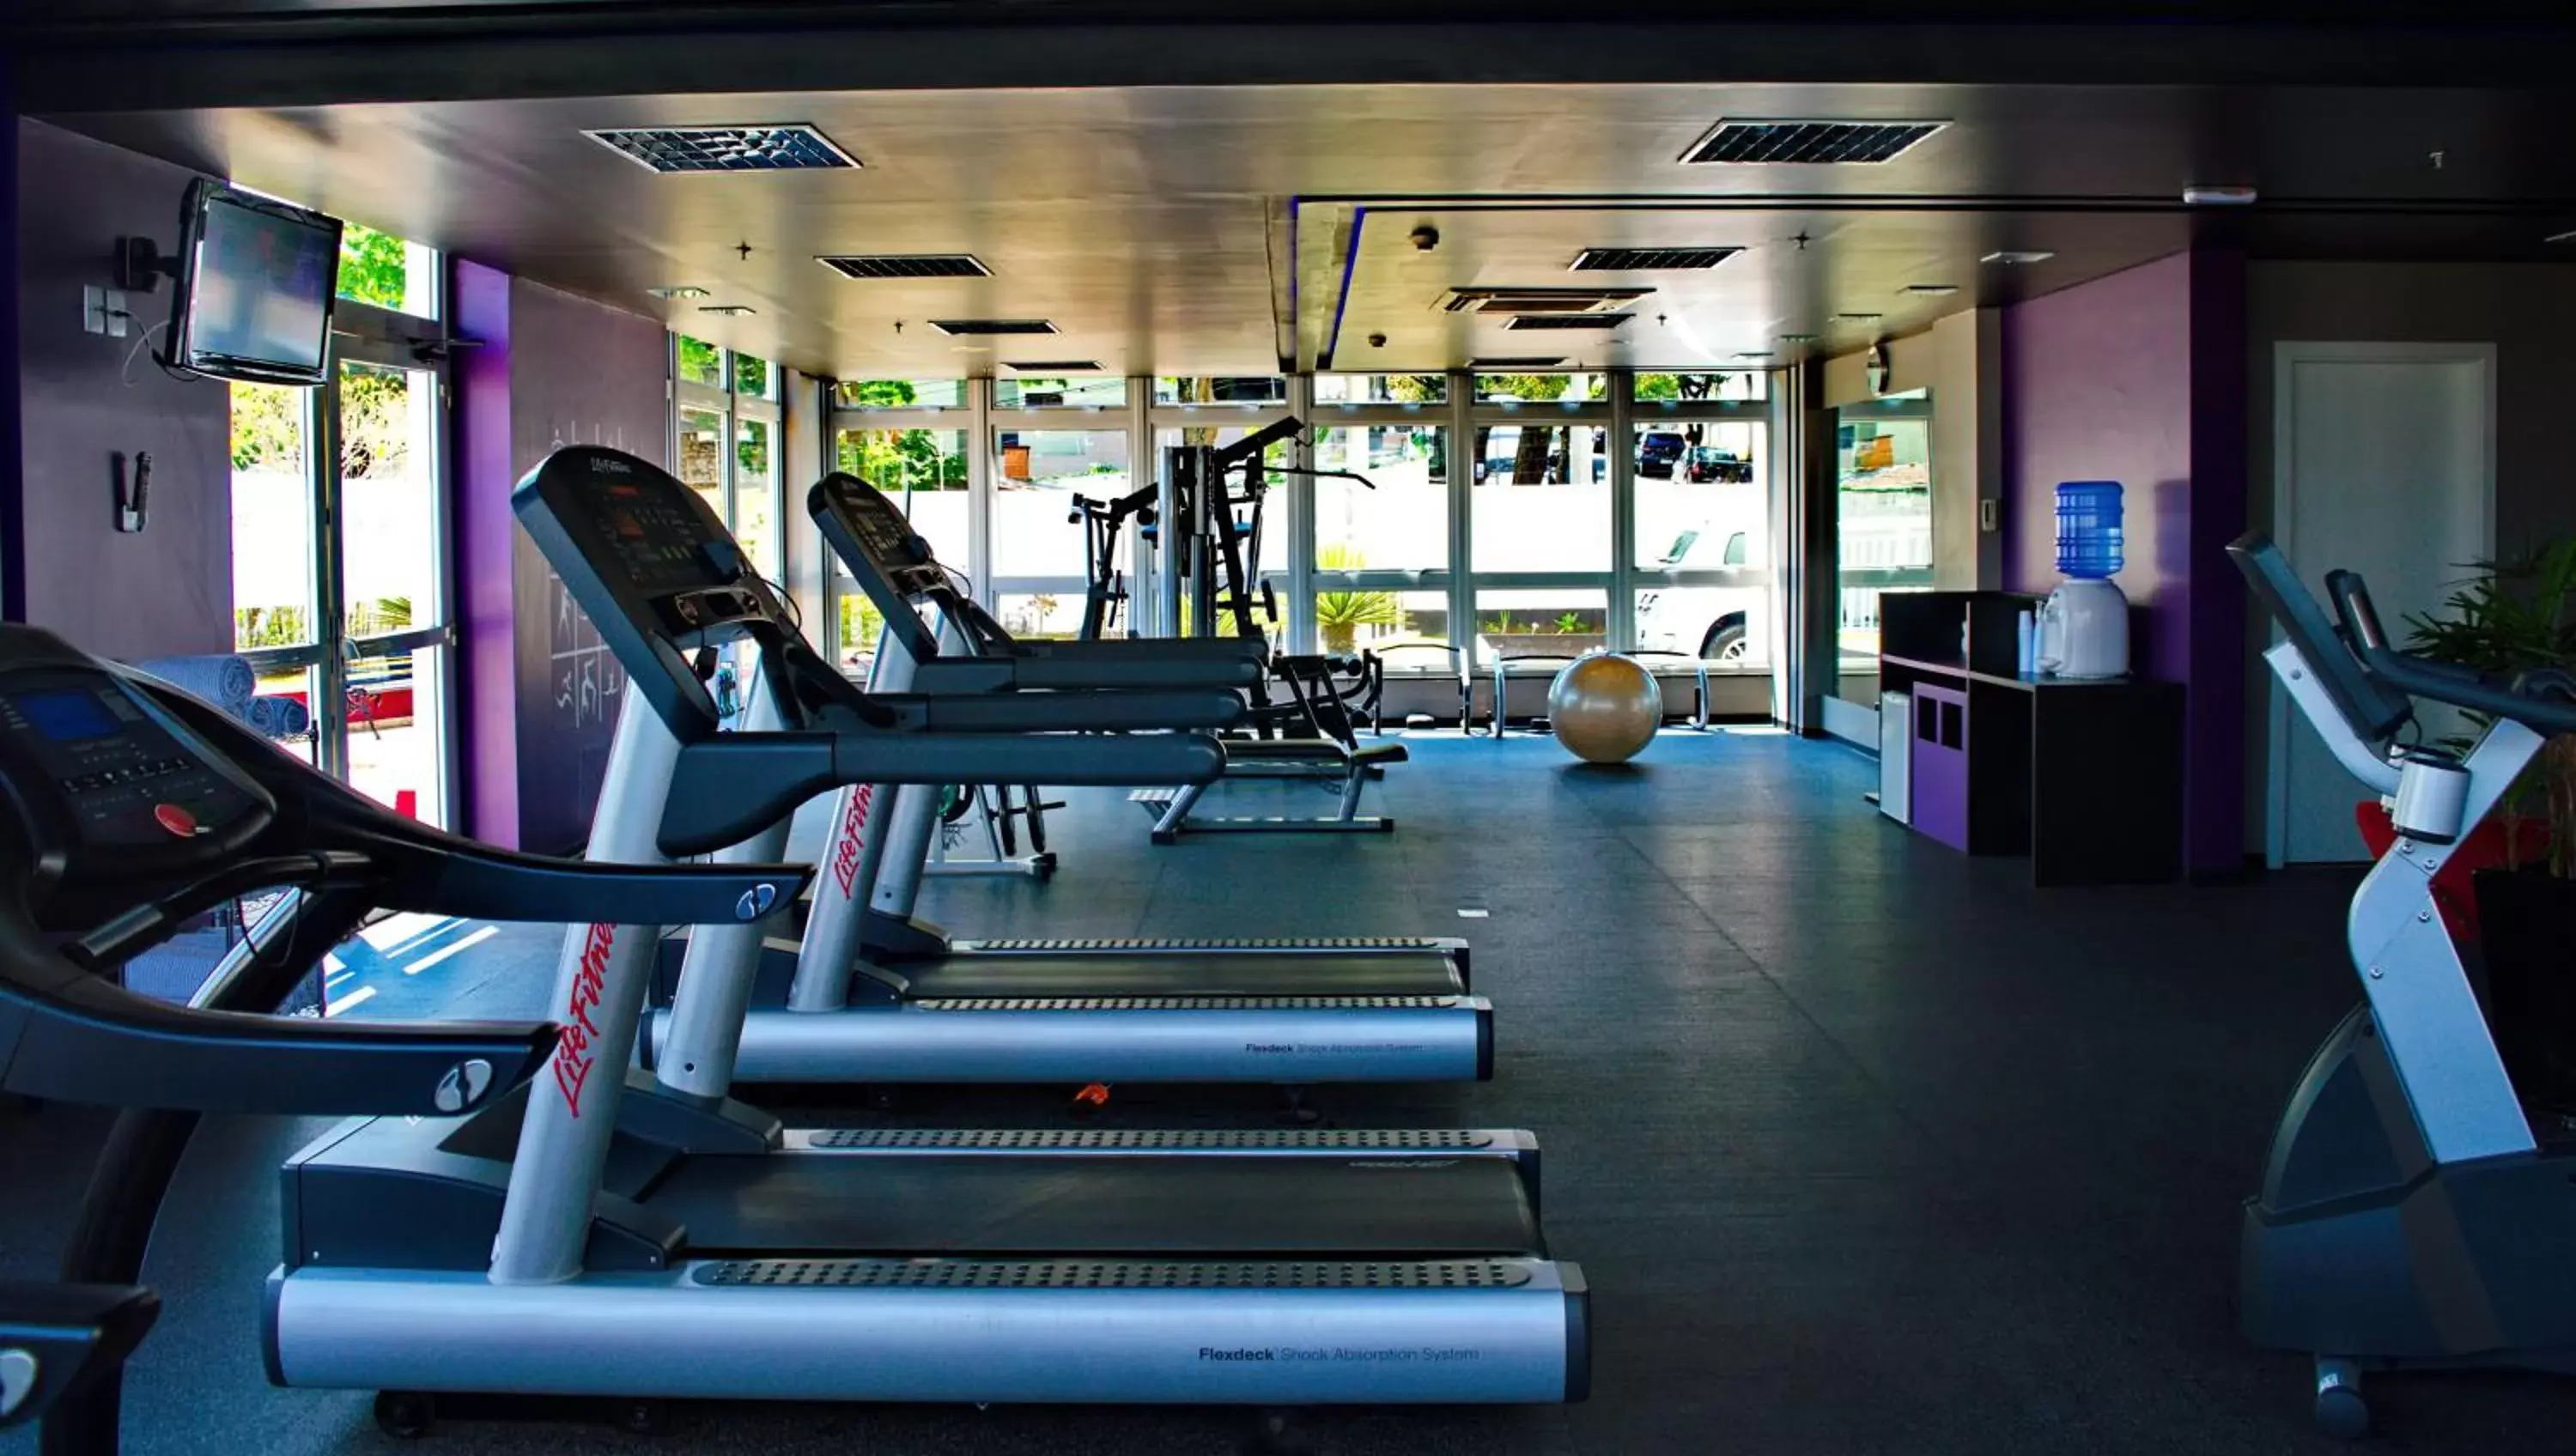 Fitness centre/facilities, Fitness Center/Facilities in Mercure Sao Jose dos Campos